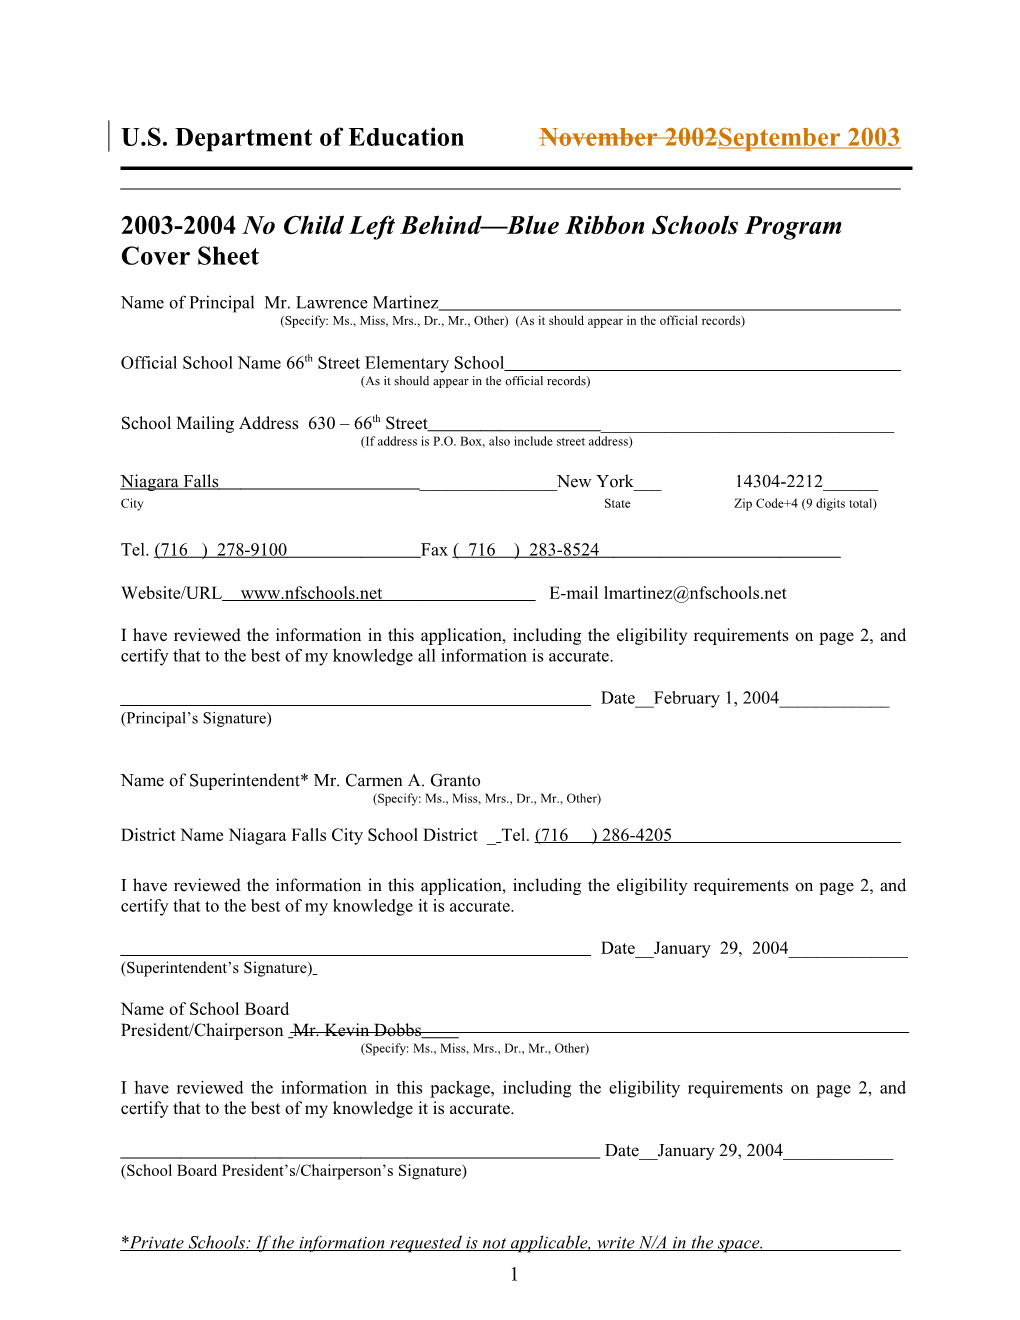 Sixty Sixth Street Elementary School 2004 No Child Left Behind-Blue Ribbon School Application